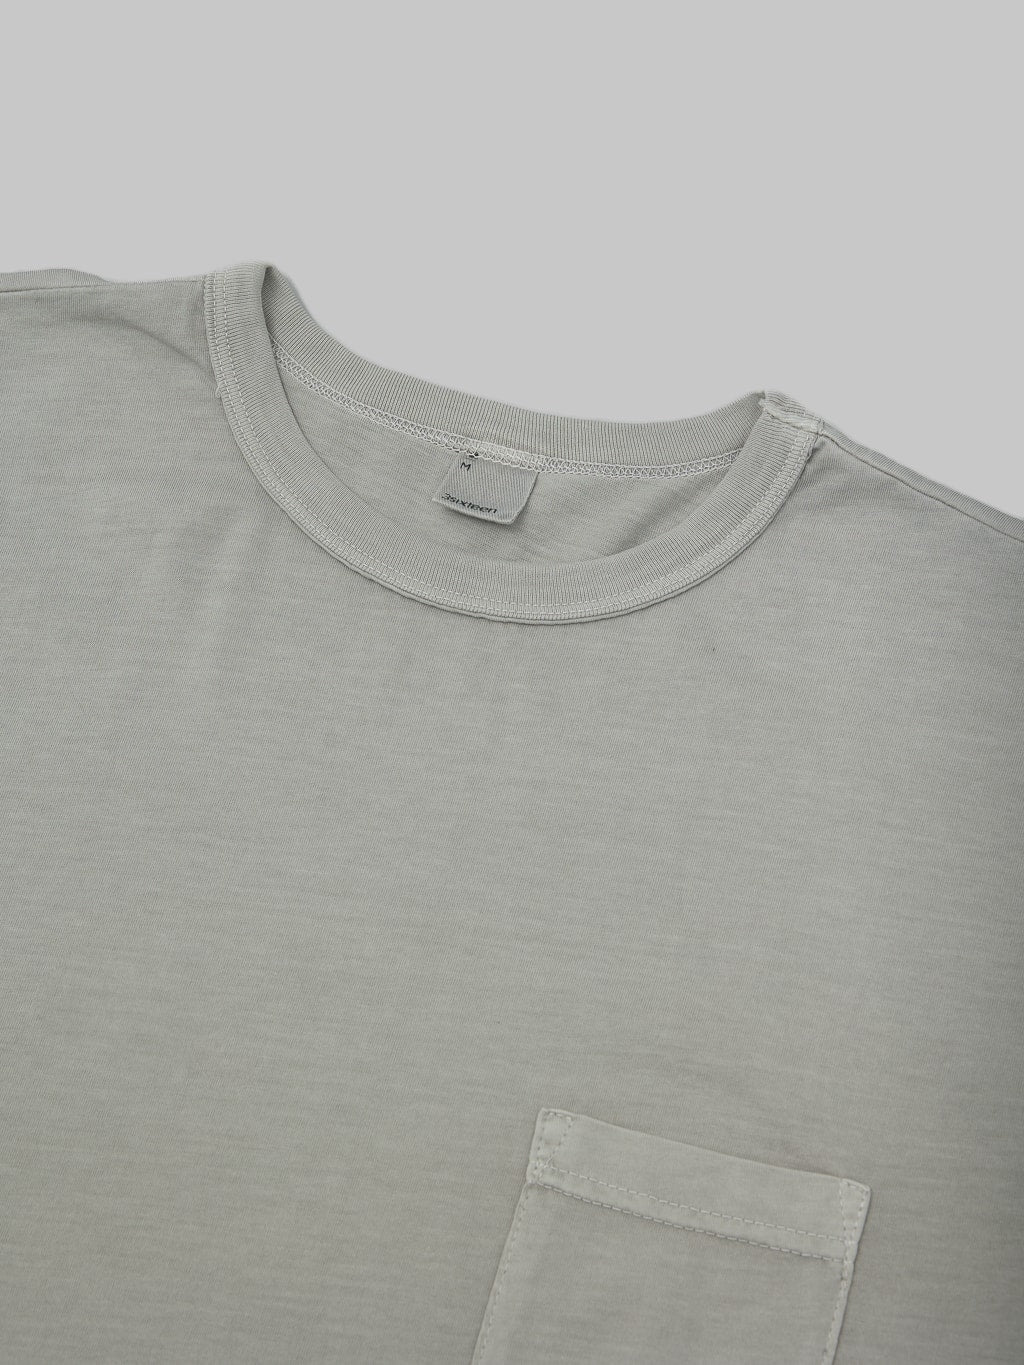 3sixteen Garment Dyed Pima Pocket Tshirt Ash details